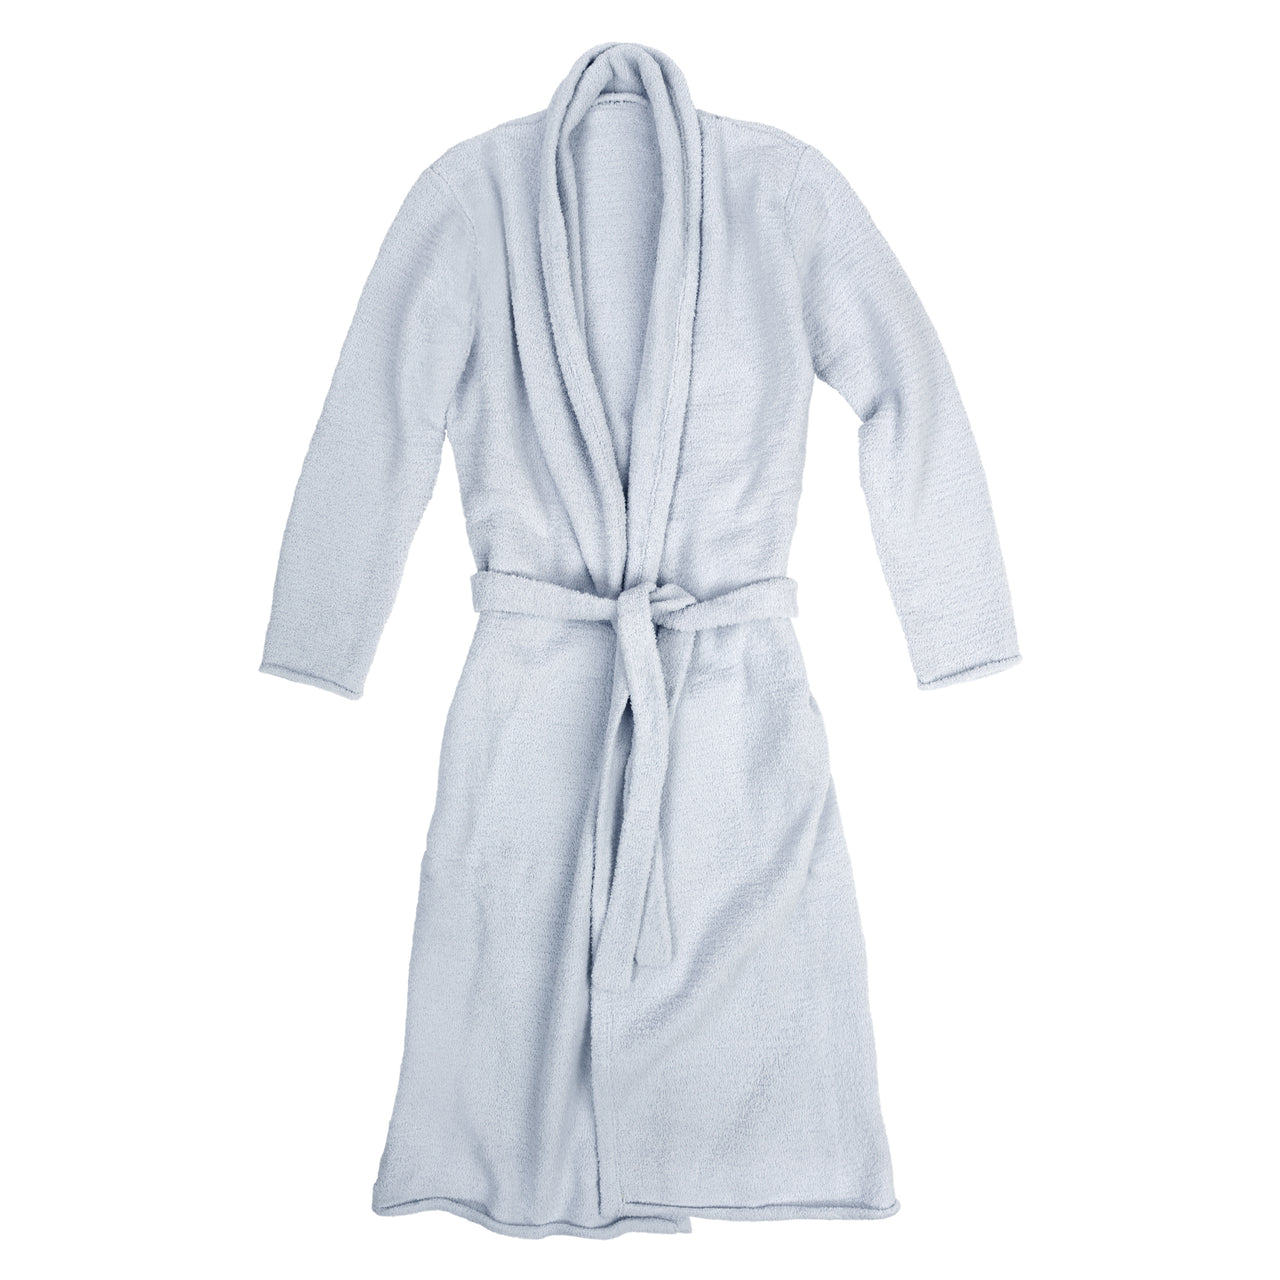 Chenille Robe - Seasonless Bath Robe